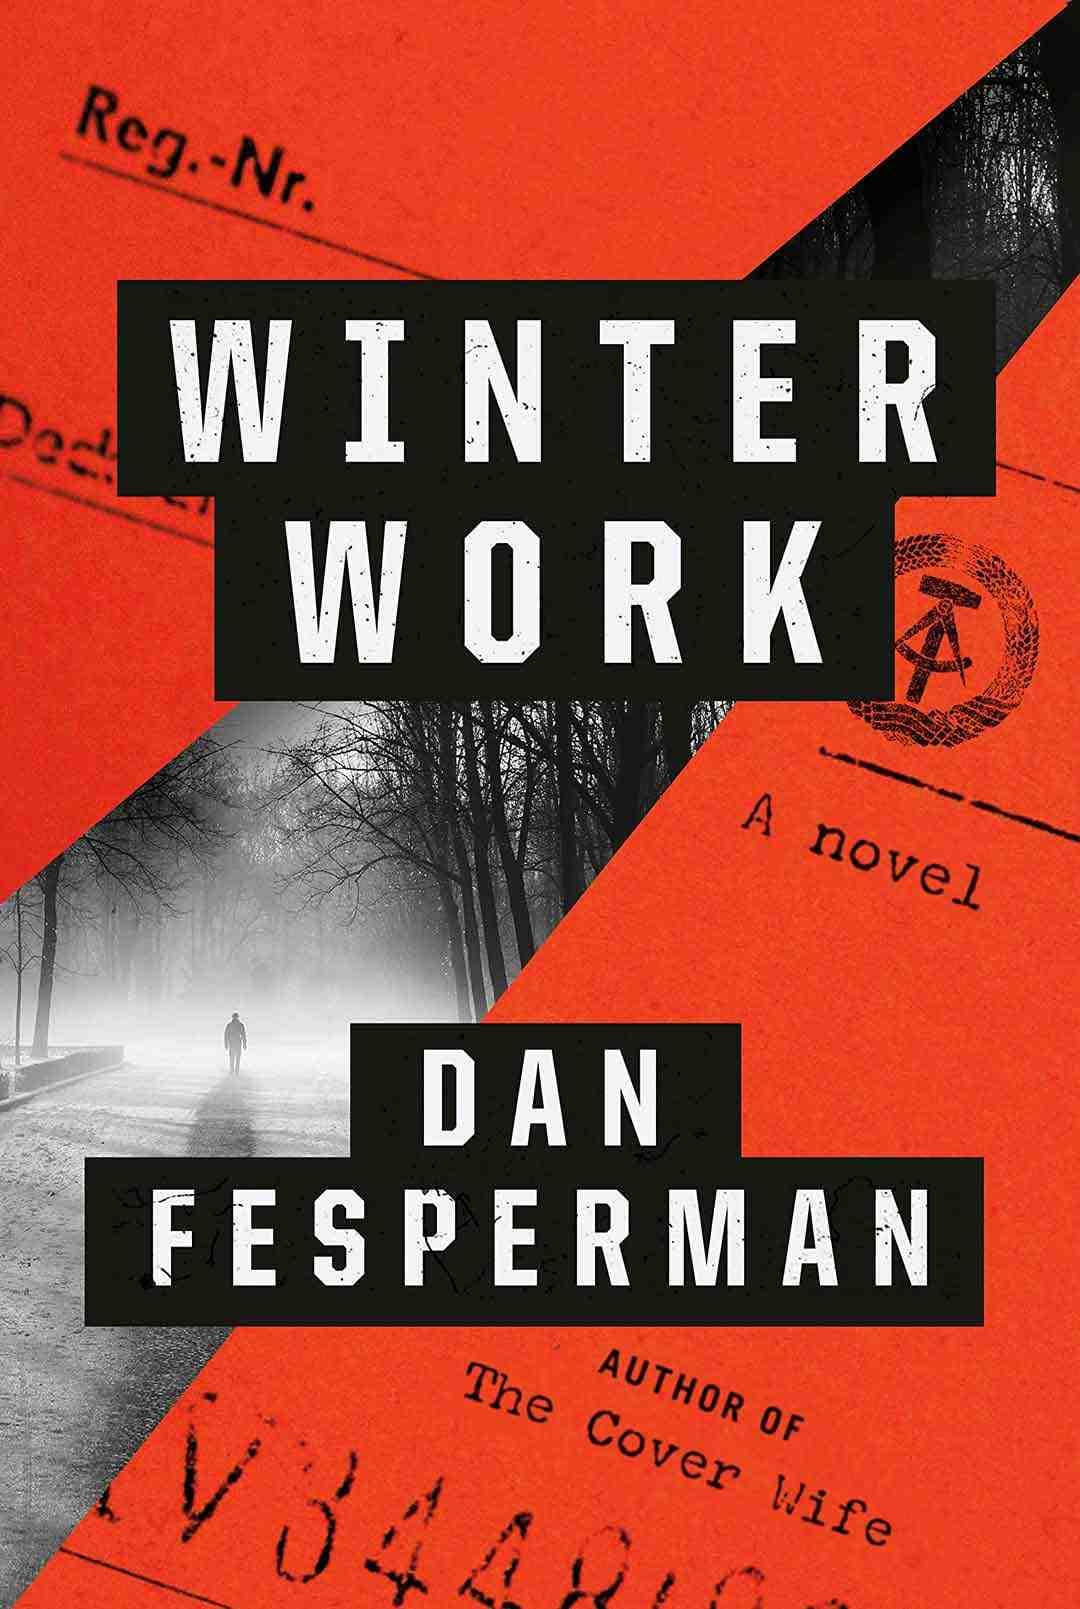 “Winter Work” by Dan Fesperman book cover